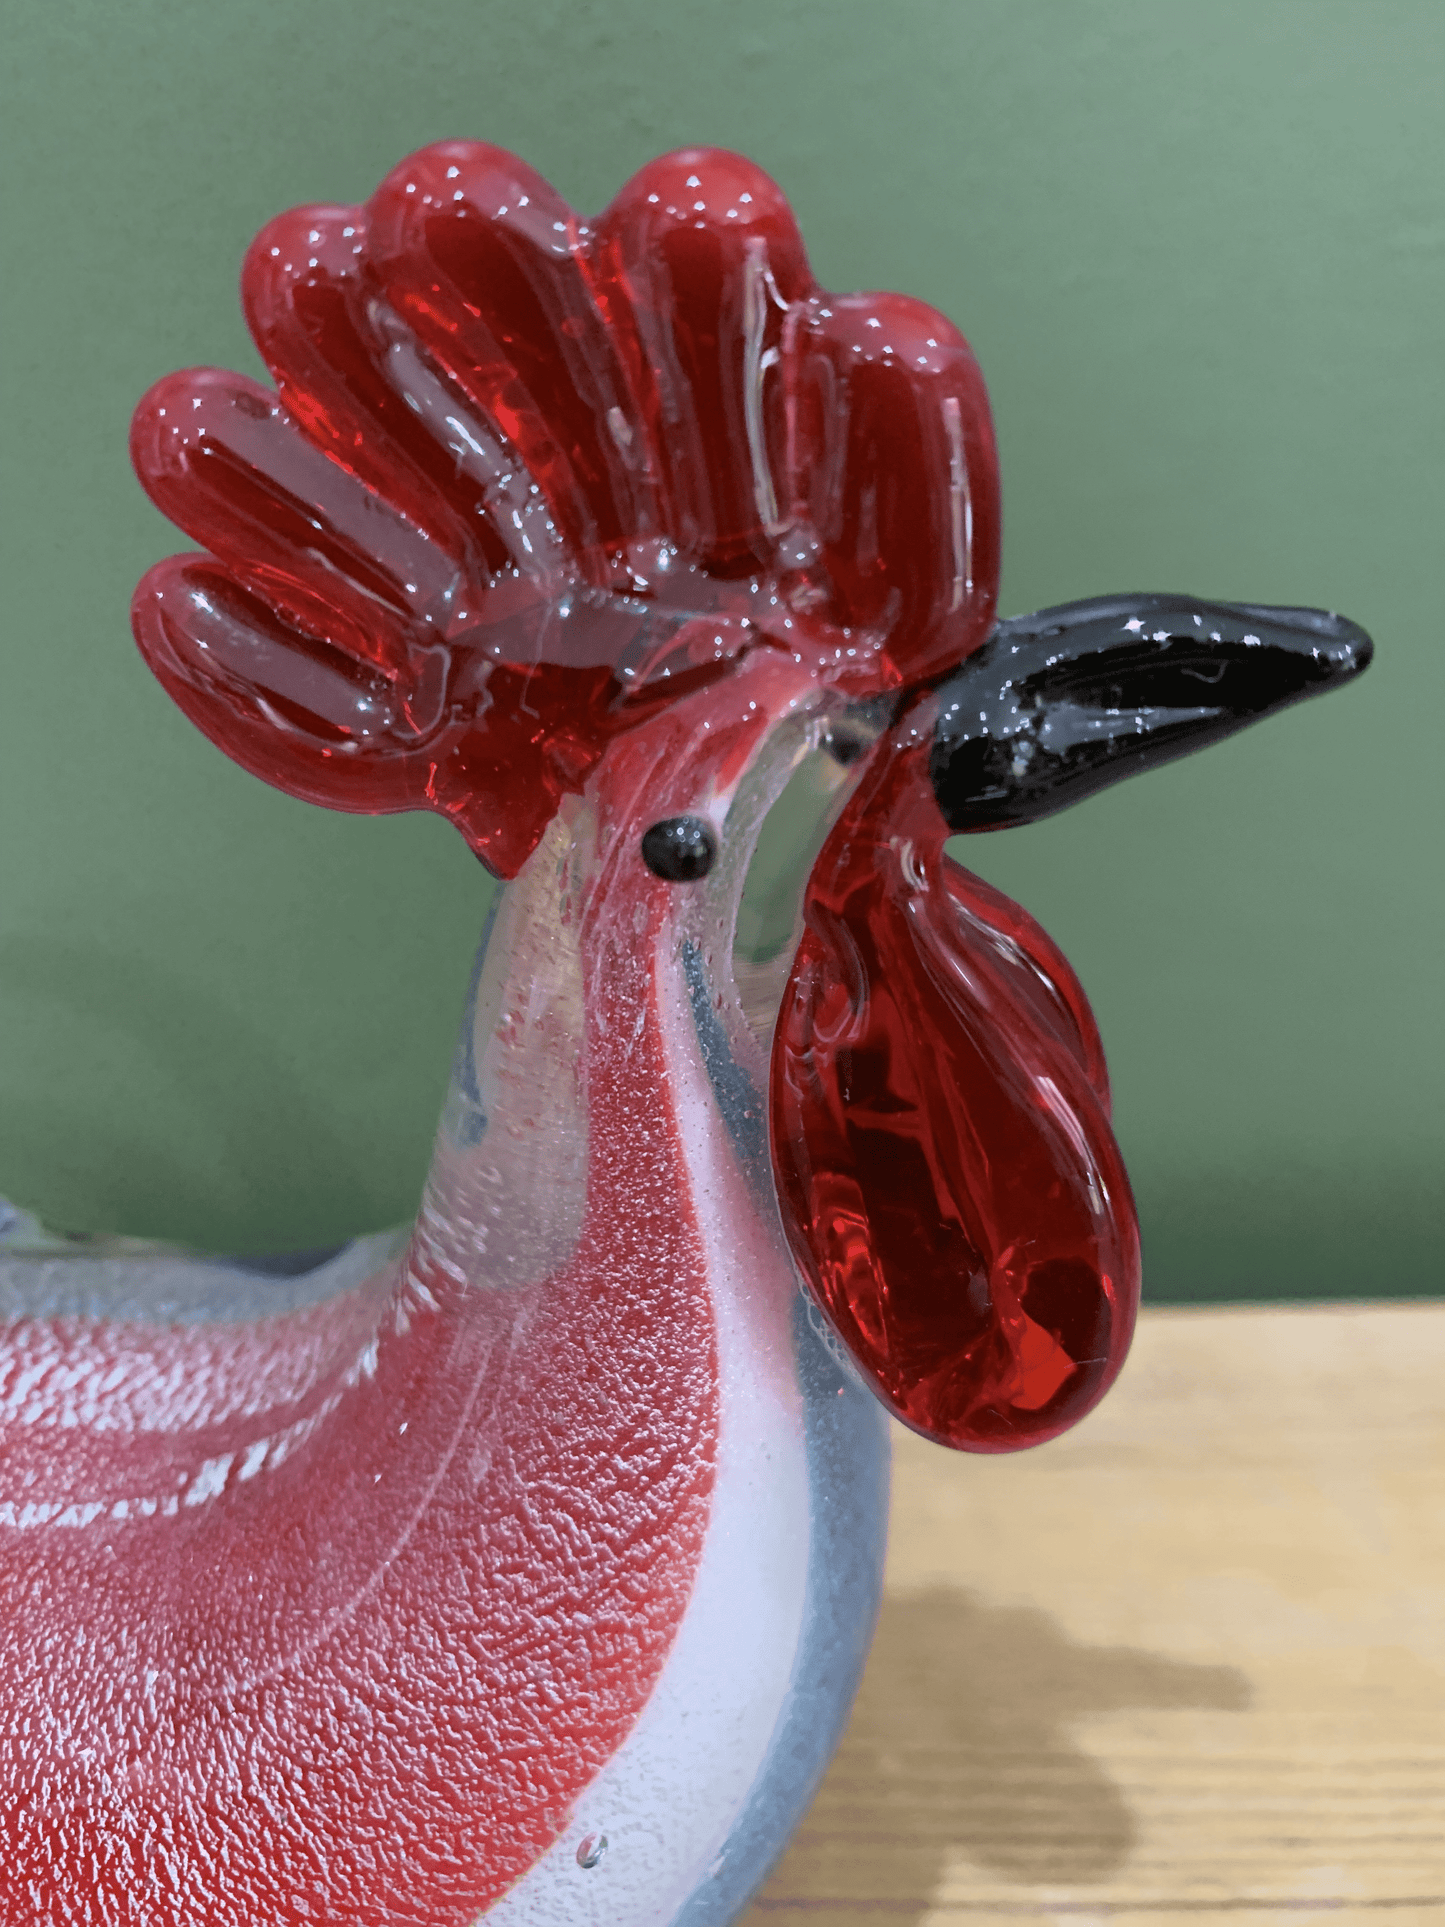 Murano Glass Cockerel - Exquisite Artistry in Vibrant Glass